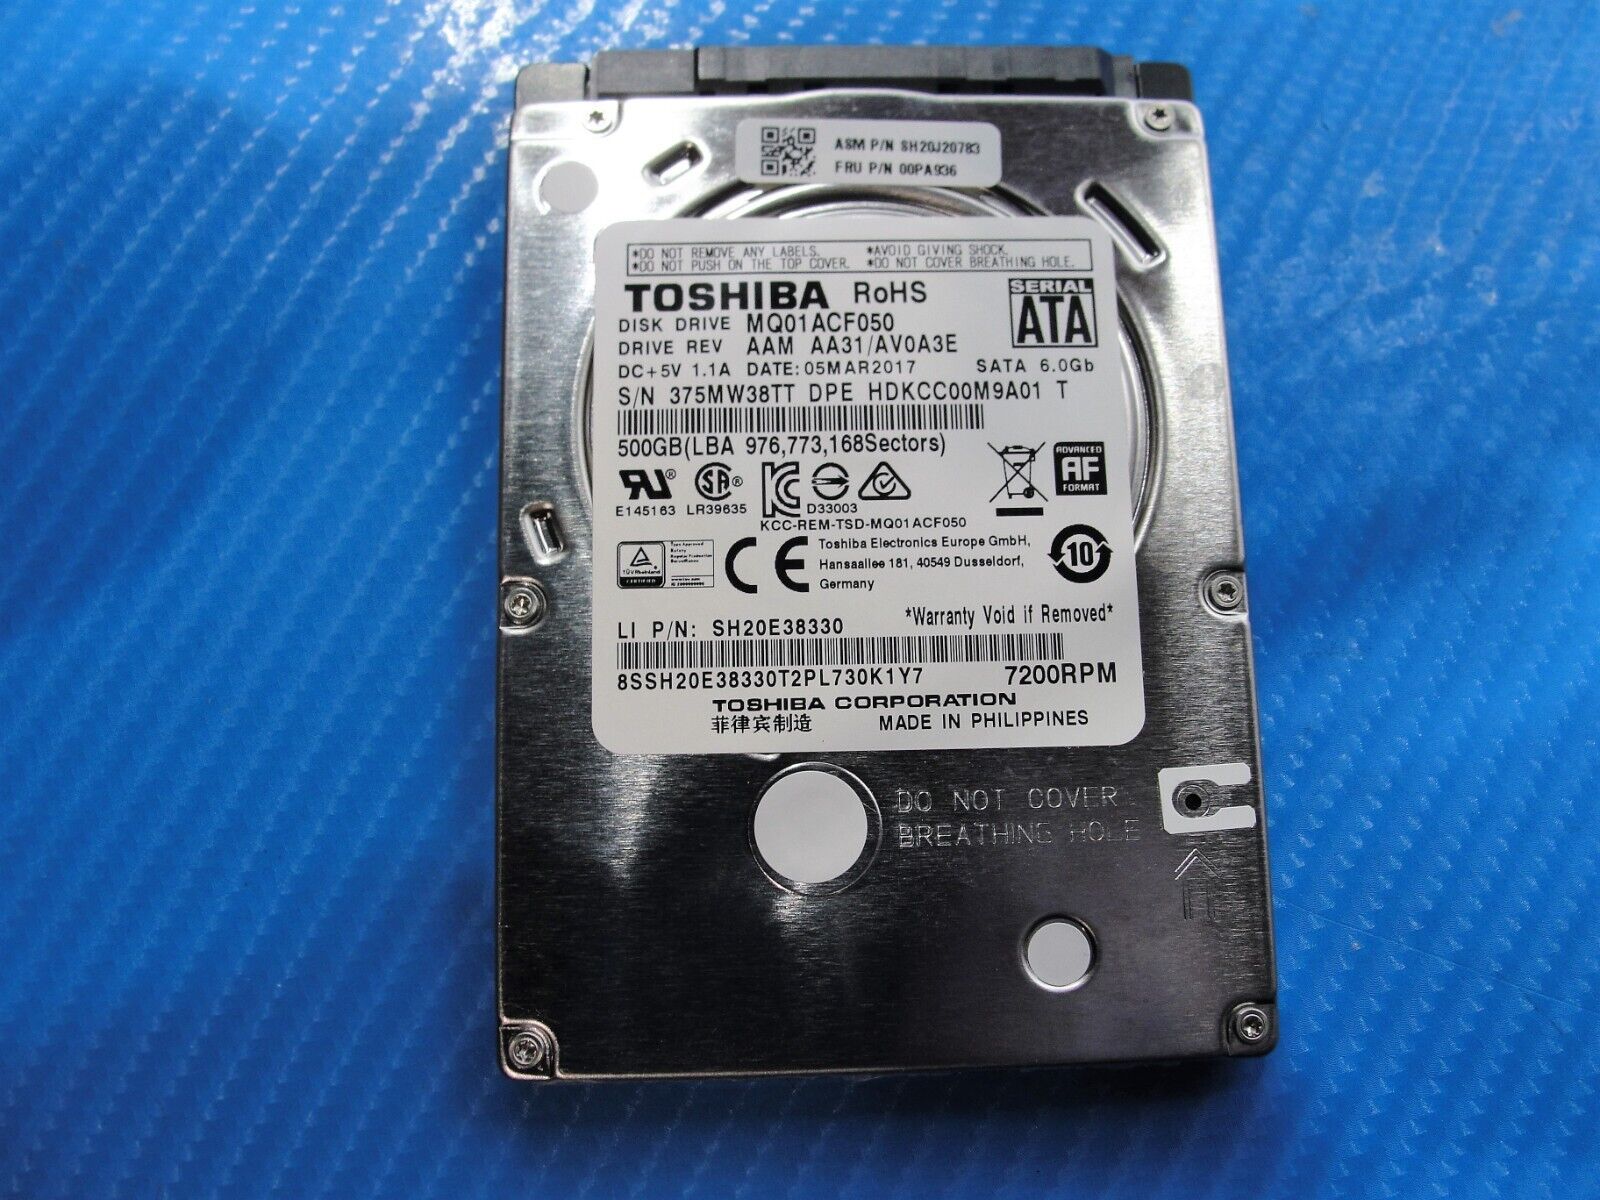 Lenovo T460 Toshiba 500GB 7200RPM SATA 2.5